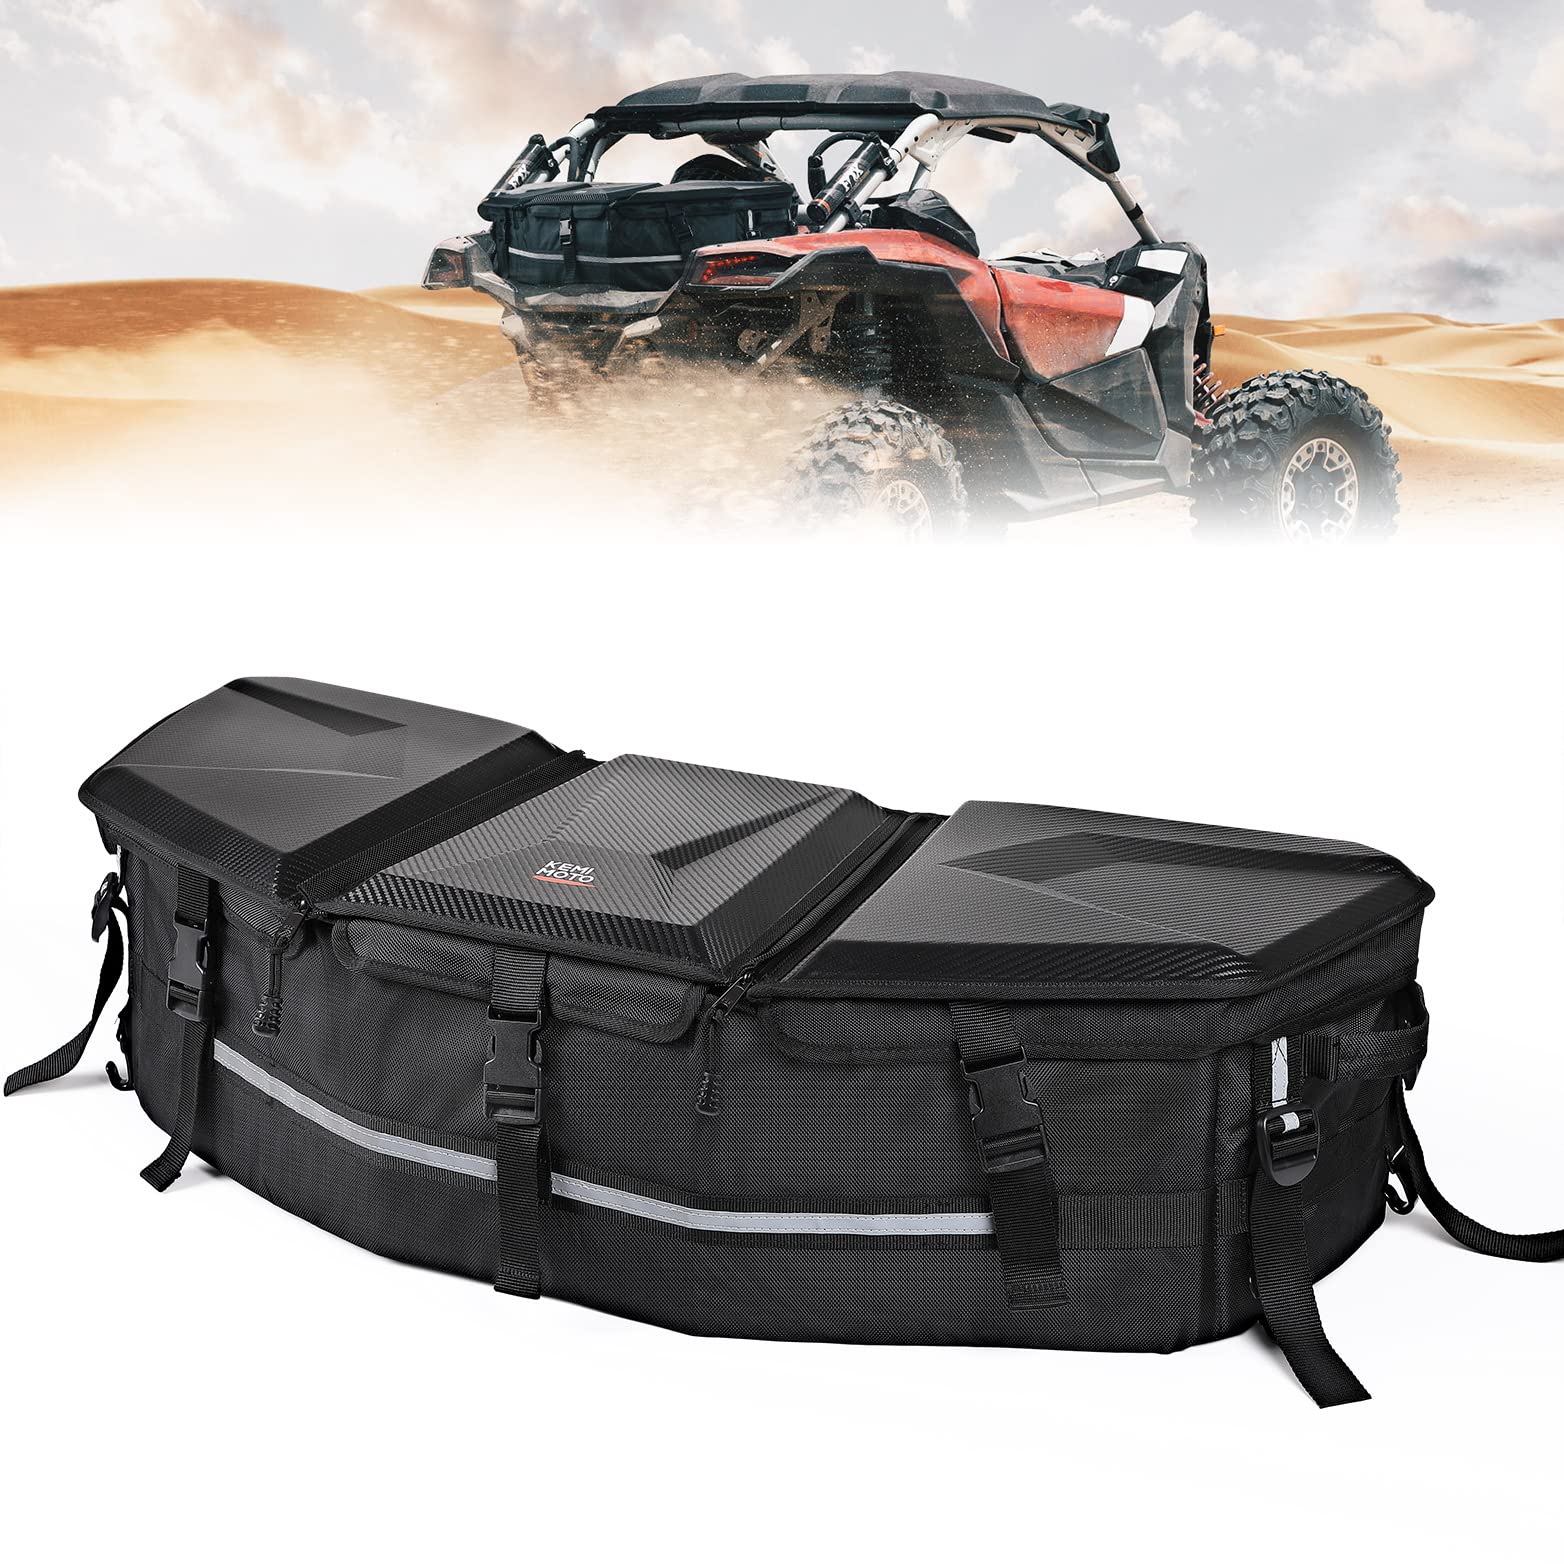  Tusk Seat Cargo Rack Kit Rear for CAN-AM Maverick X3 Max X RS  Turbo RR Smart-Shox 72 Inch 2021-2022 : Automotive